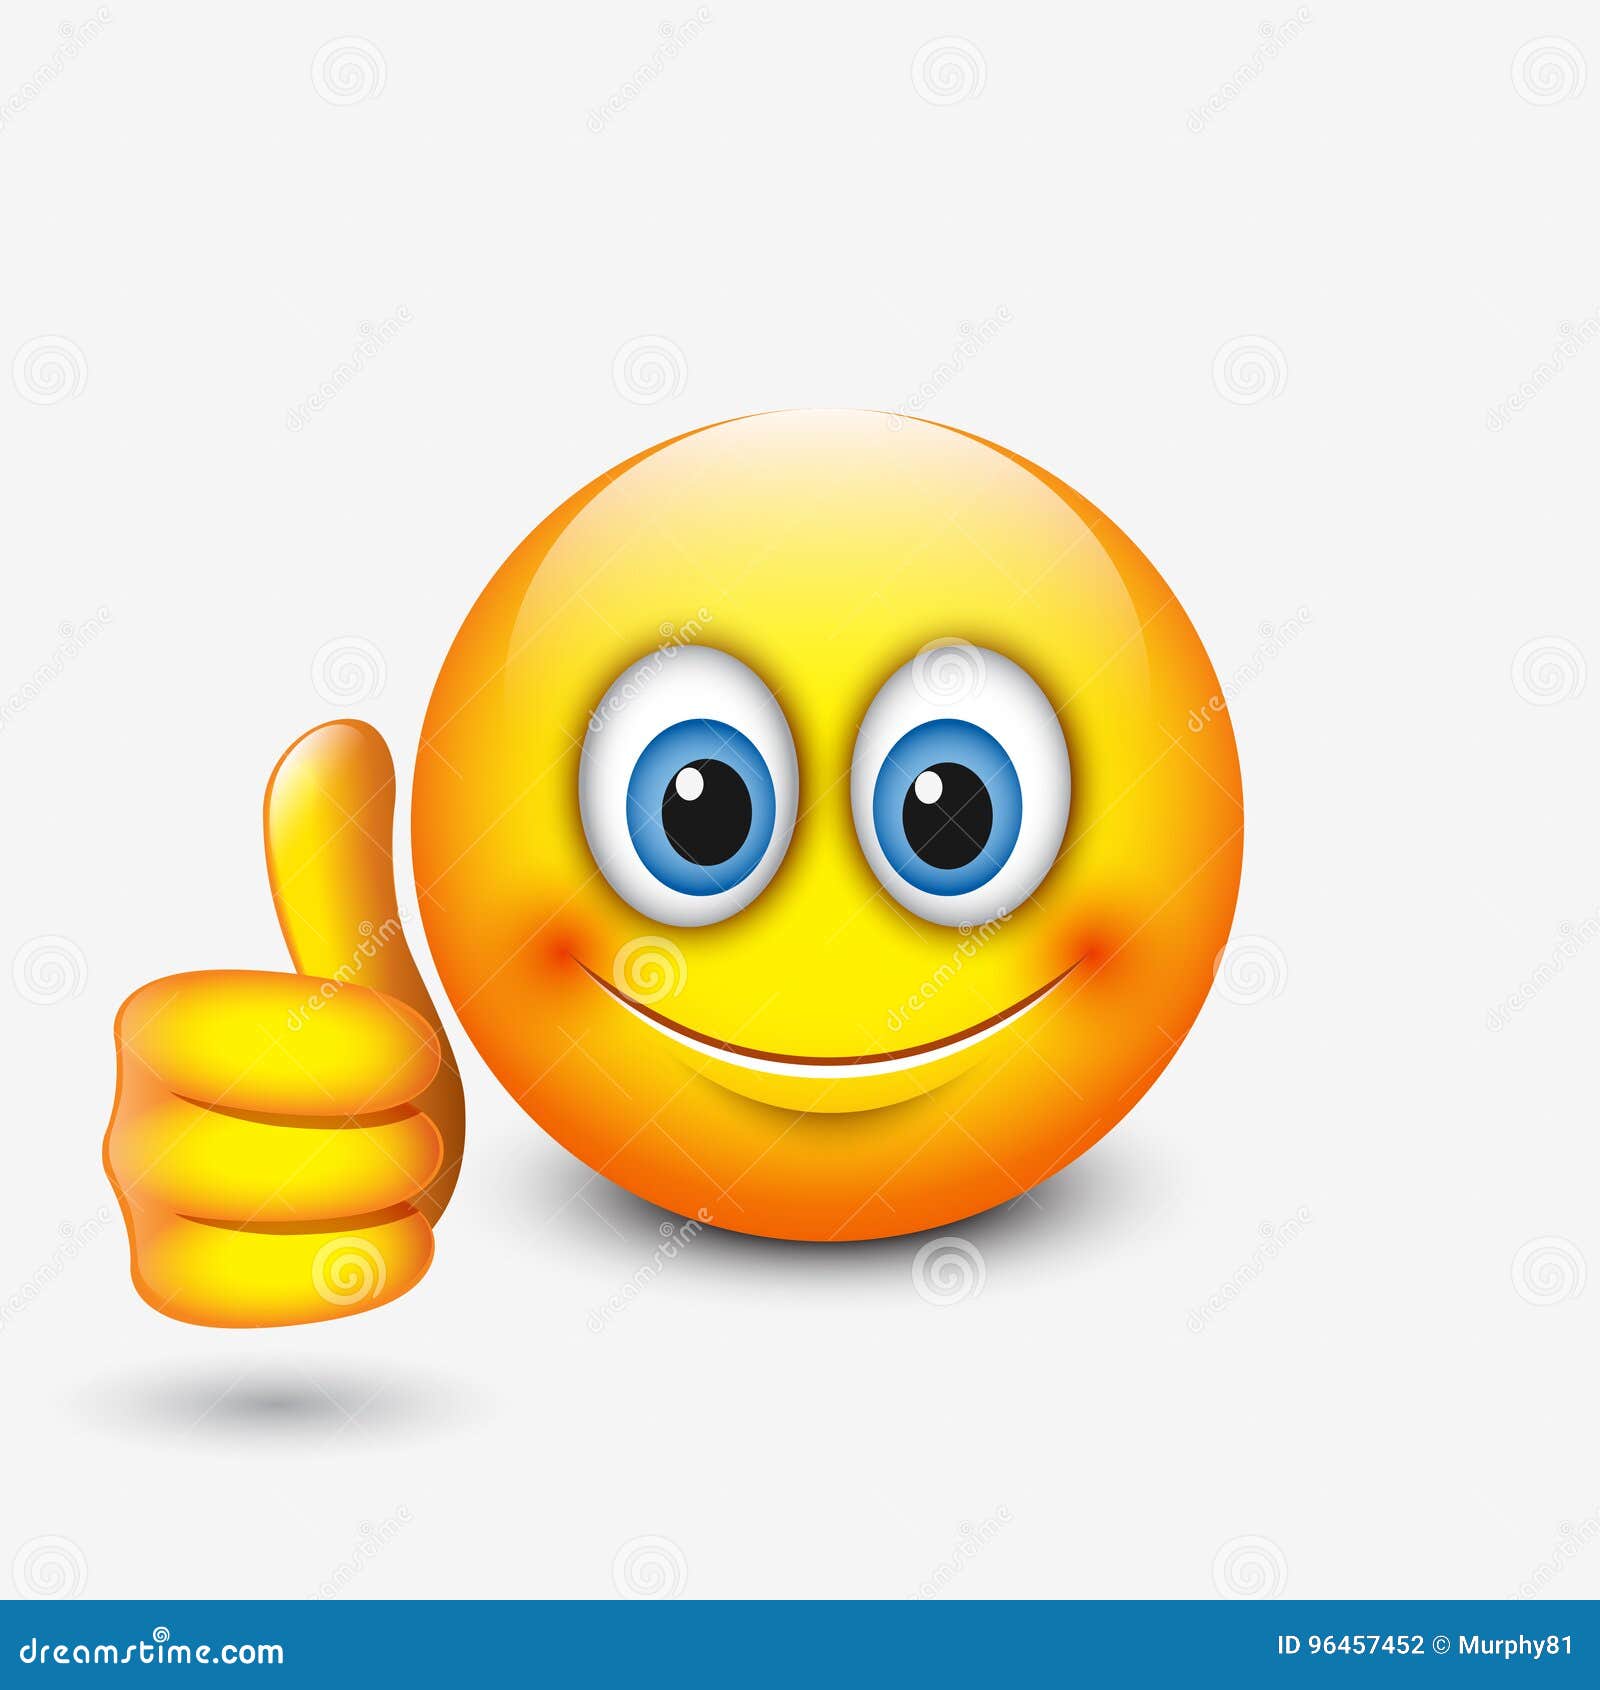 cute emoticon with thumb up, emoji -  